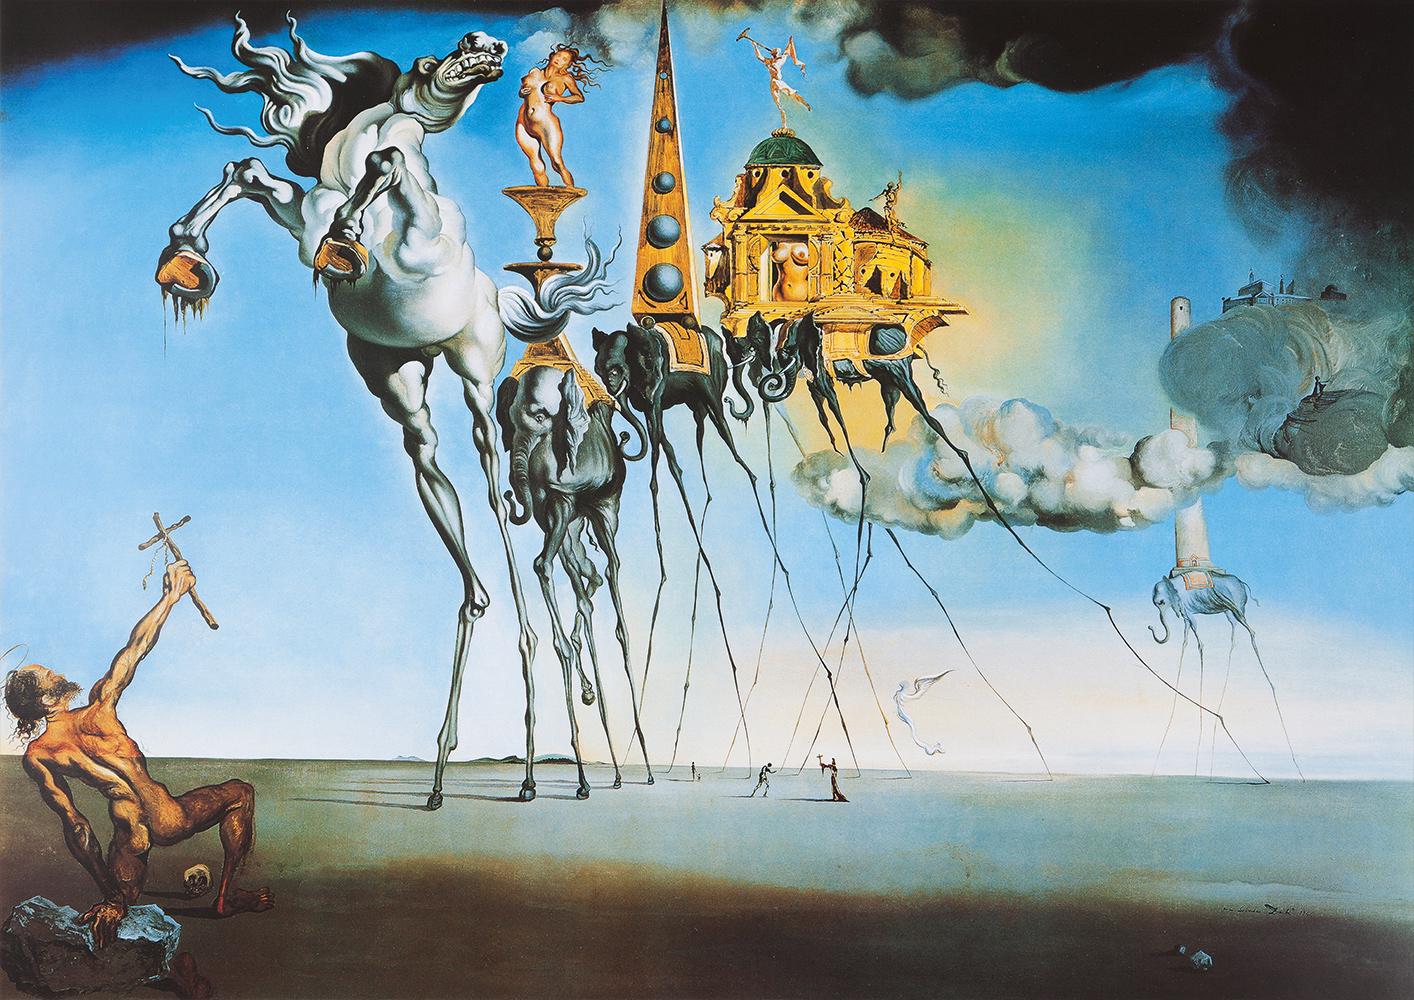 Puzzle Salvador Dalí - The Temptation of St. Anthony